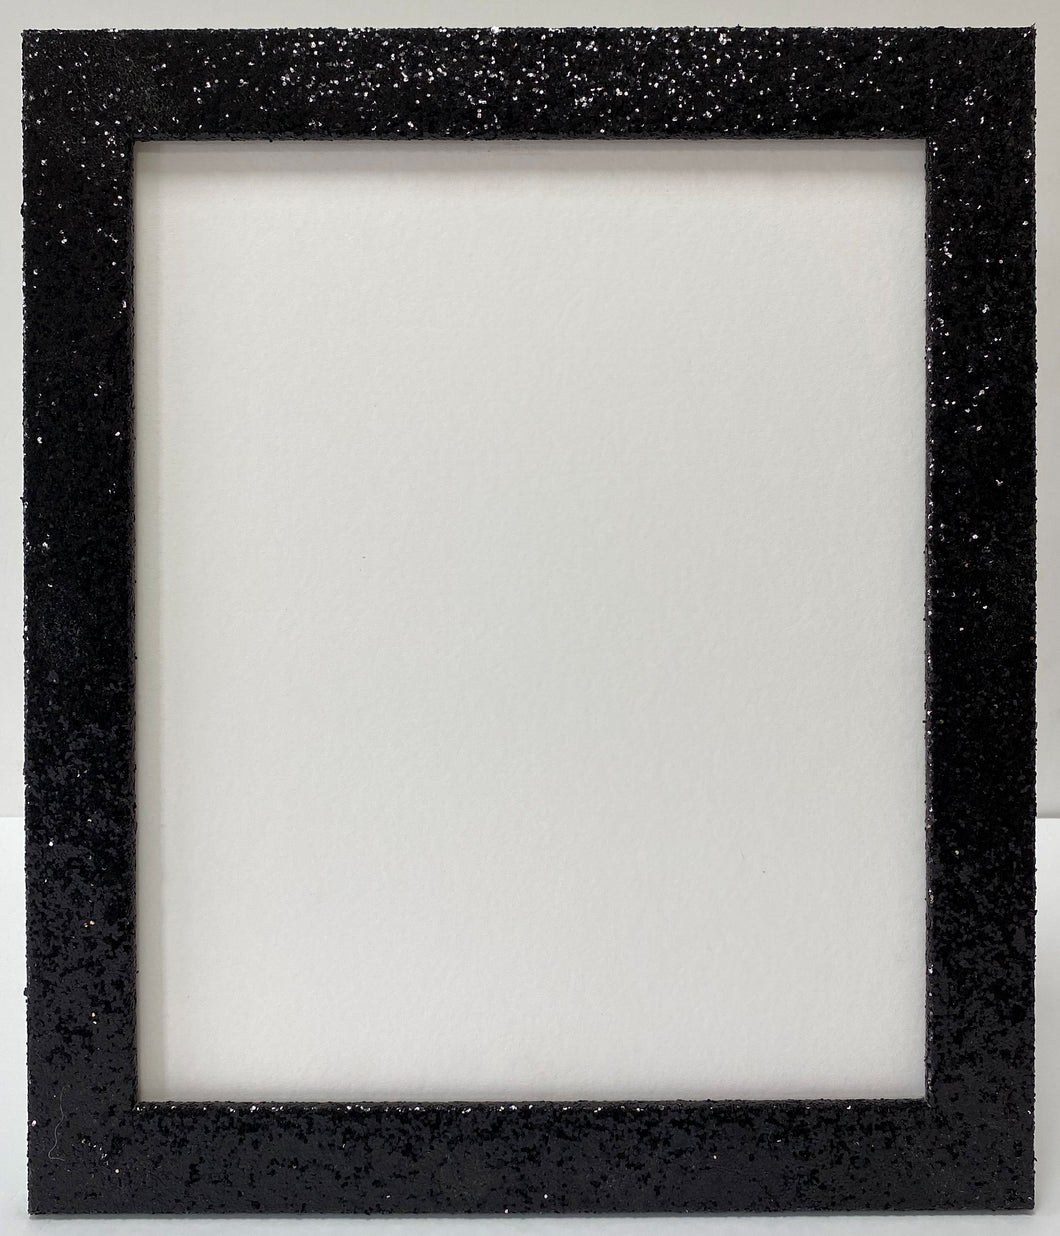 Black Glitter Picture Frame (32mm wide)